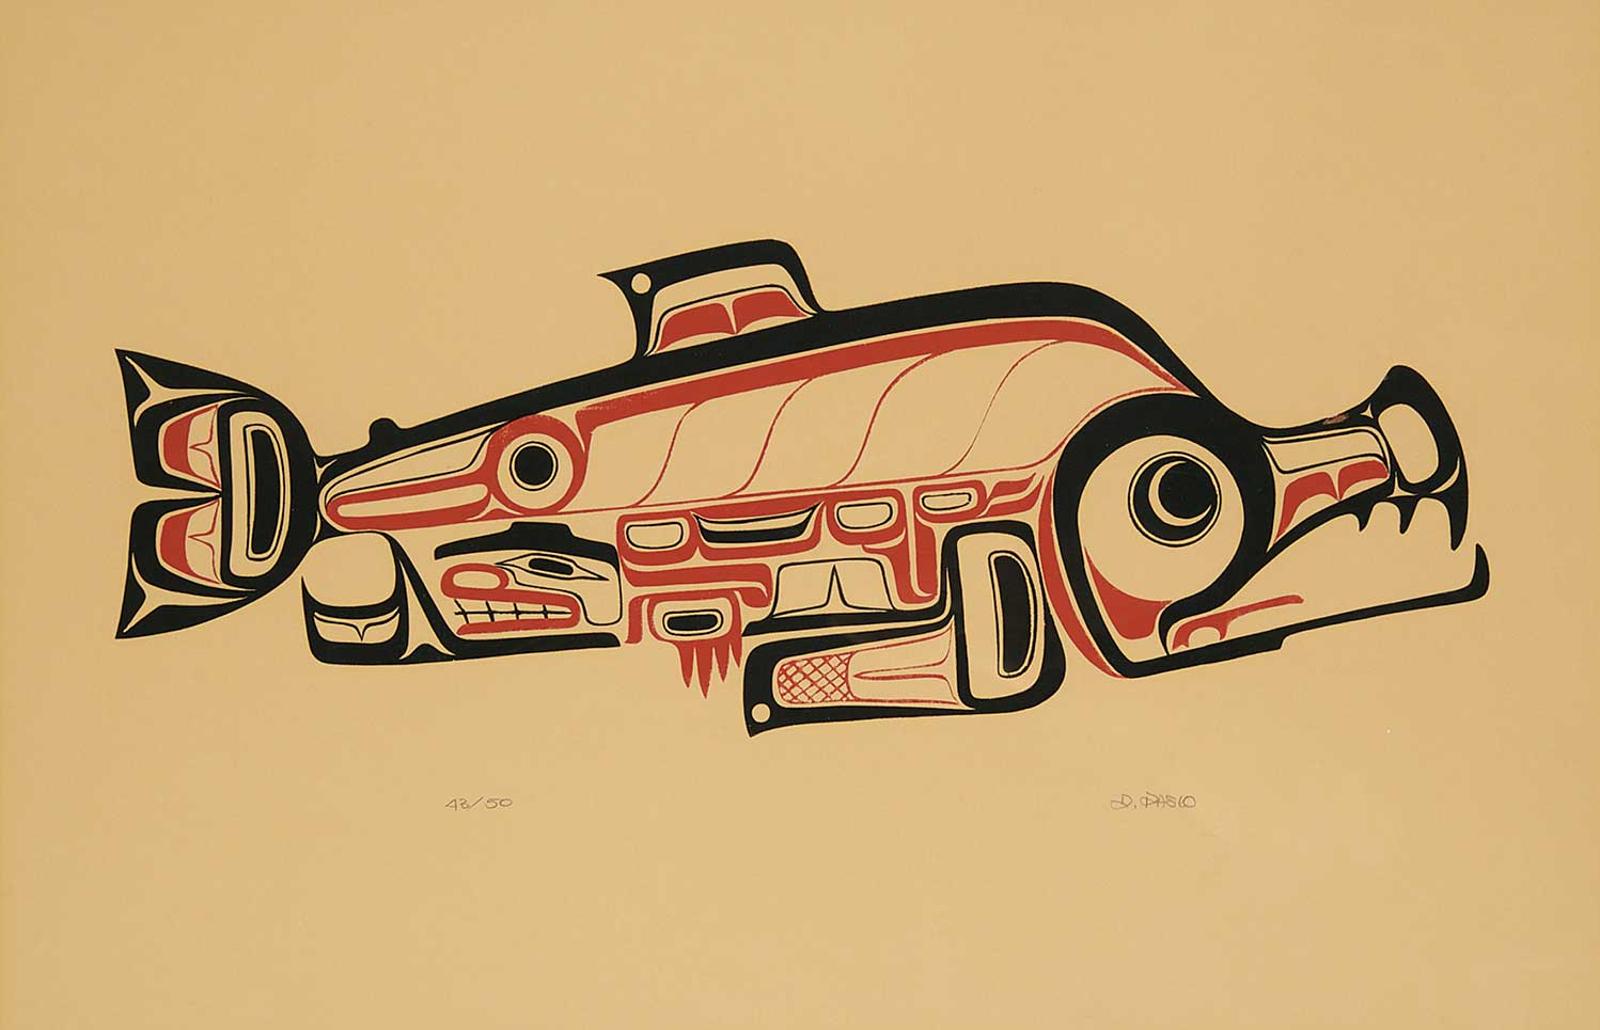 Duane Pasco - Untitled - Salmon  #43/50